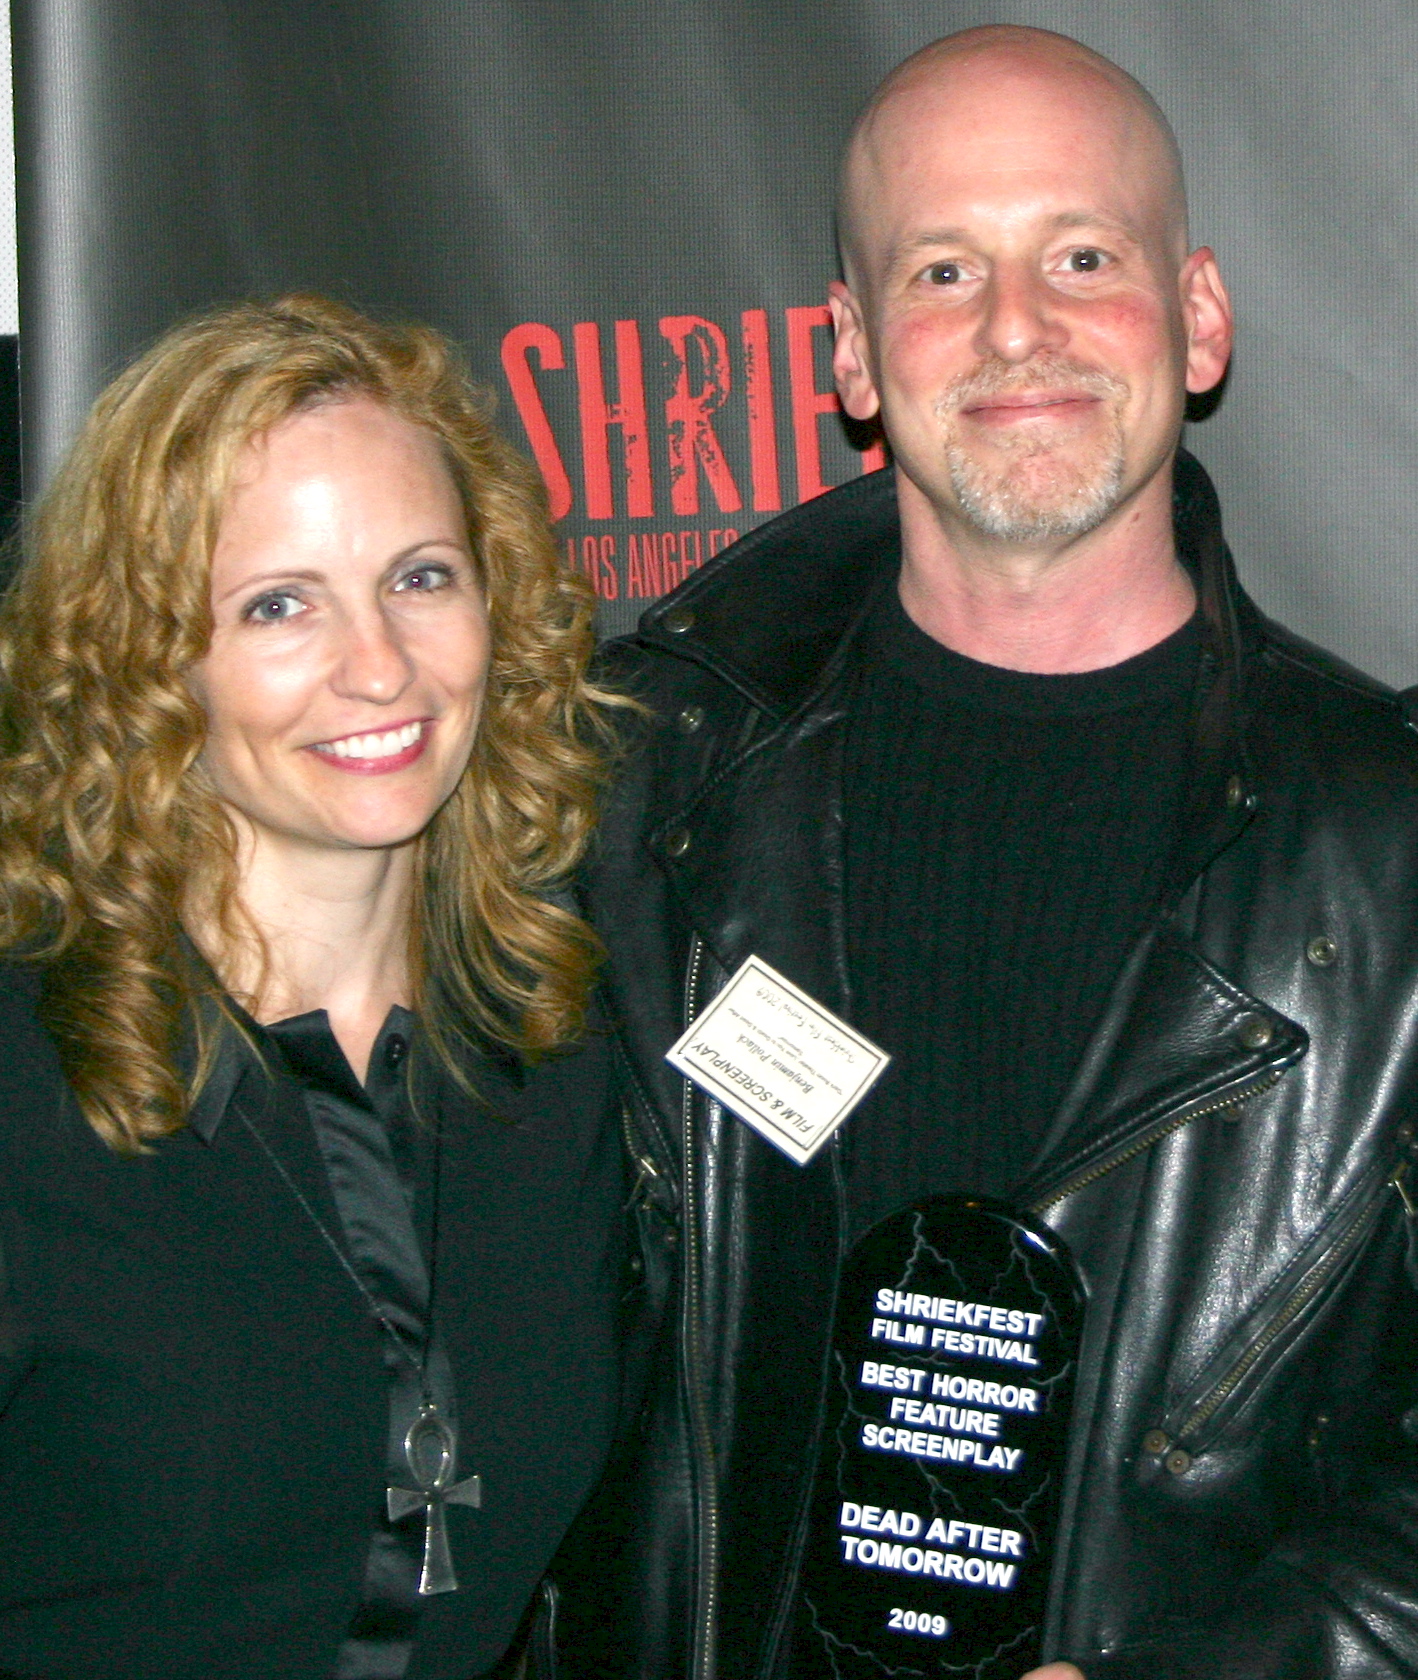 Director Benjamin Pollack and Shriekfest Festival Director Denise Gossett at the 2009 Shriekfest. Best Horror Feature Screenplay Award to Benjamin Pollack for Dead After Tomorrow